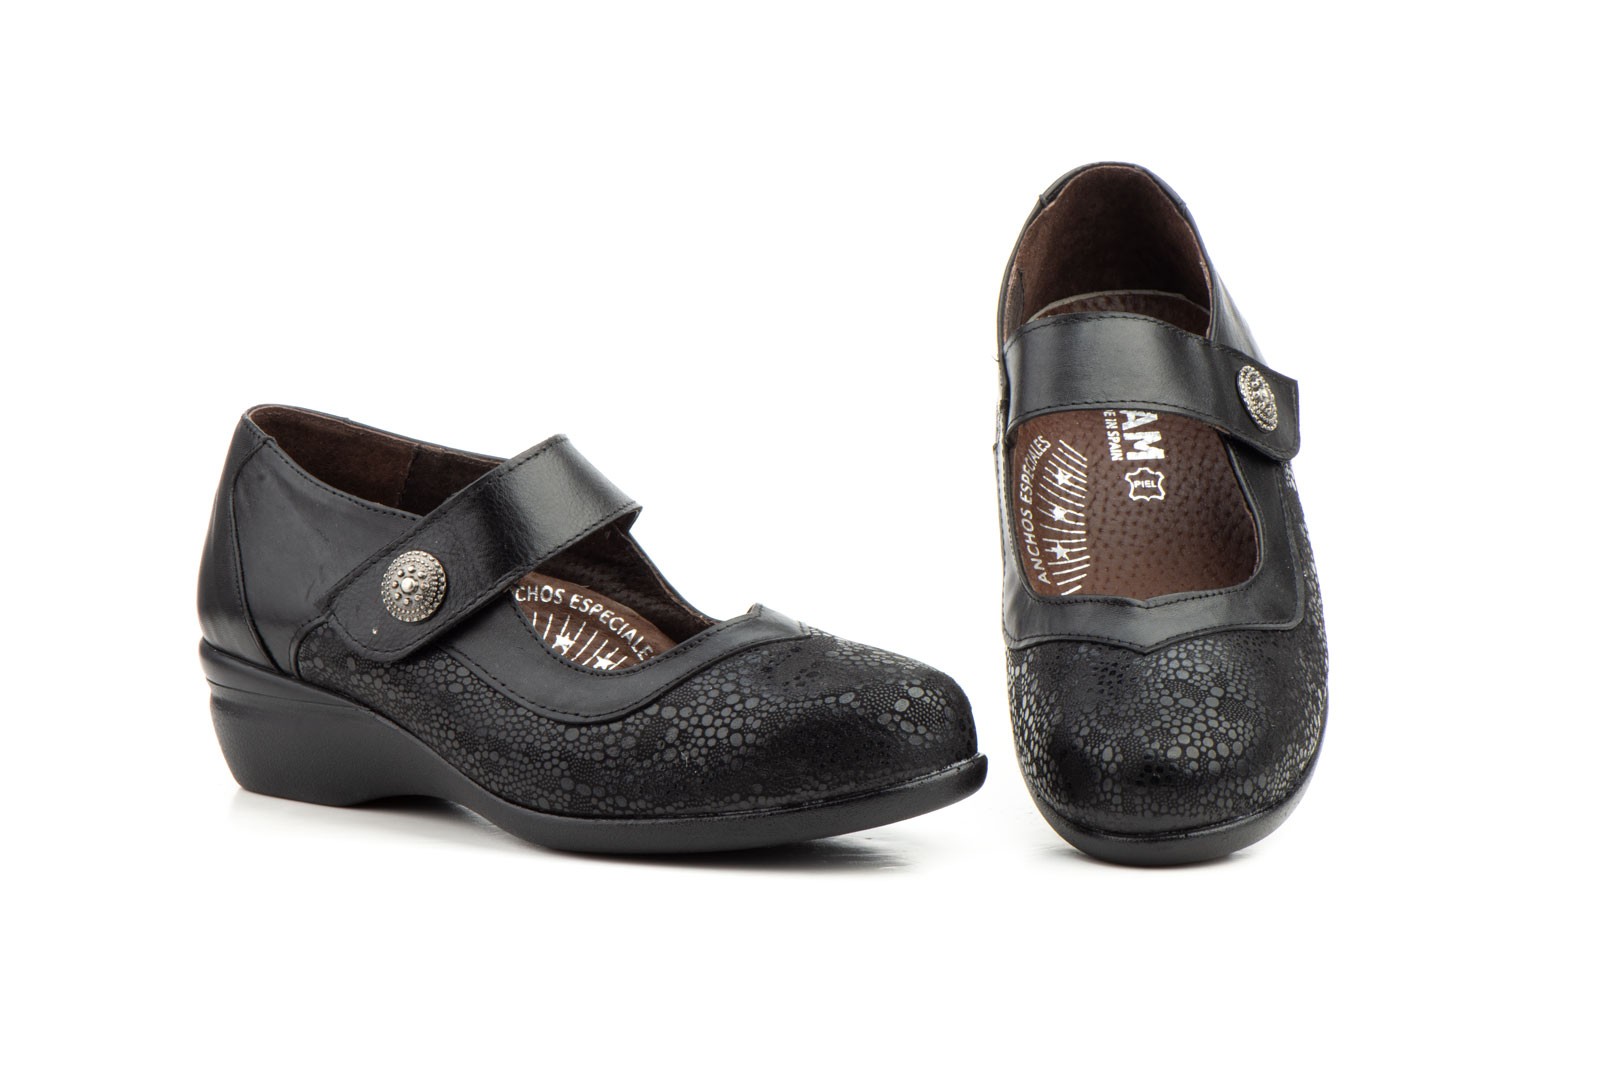 https://www.zapatoideal.com/4998/zapatos-mujer-ancho-especial-licra-piel-negro-velcro.jpg